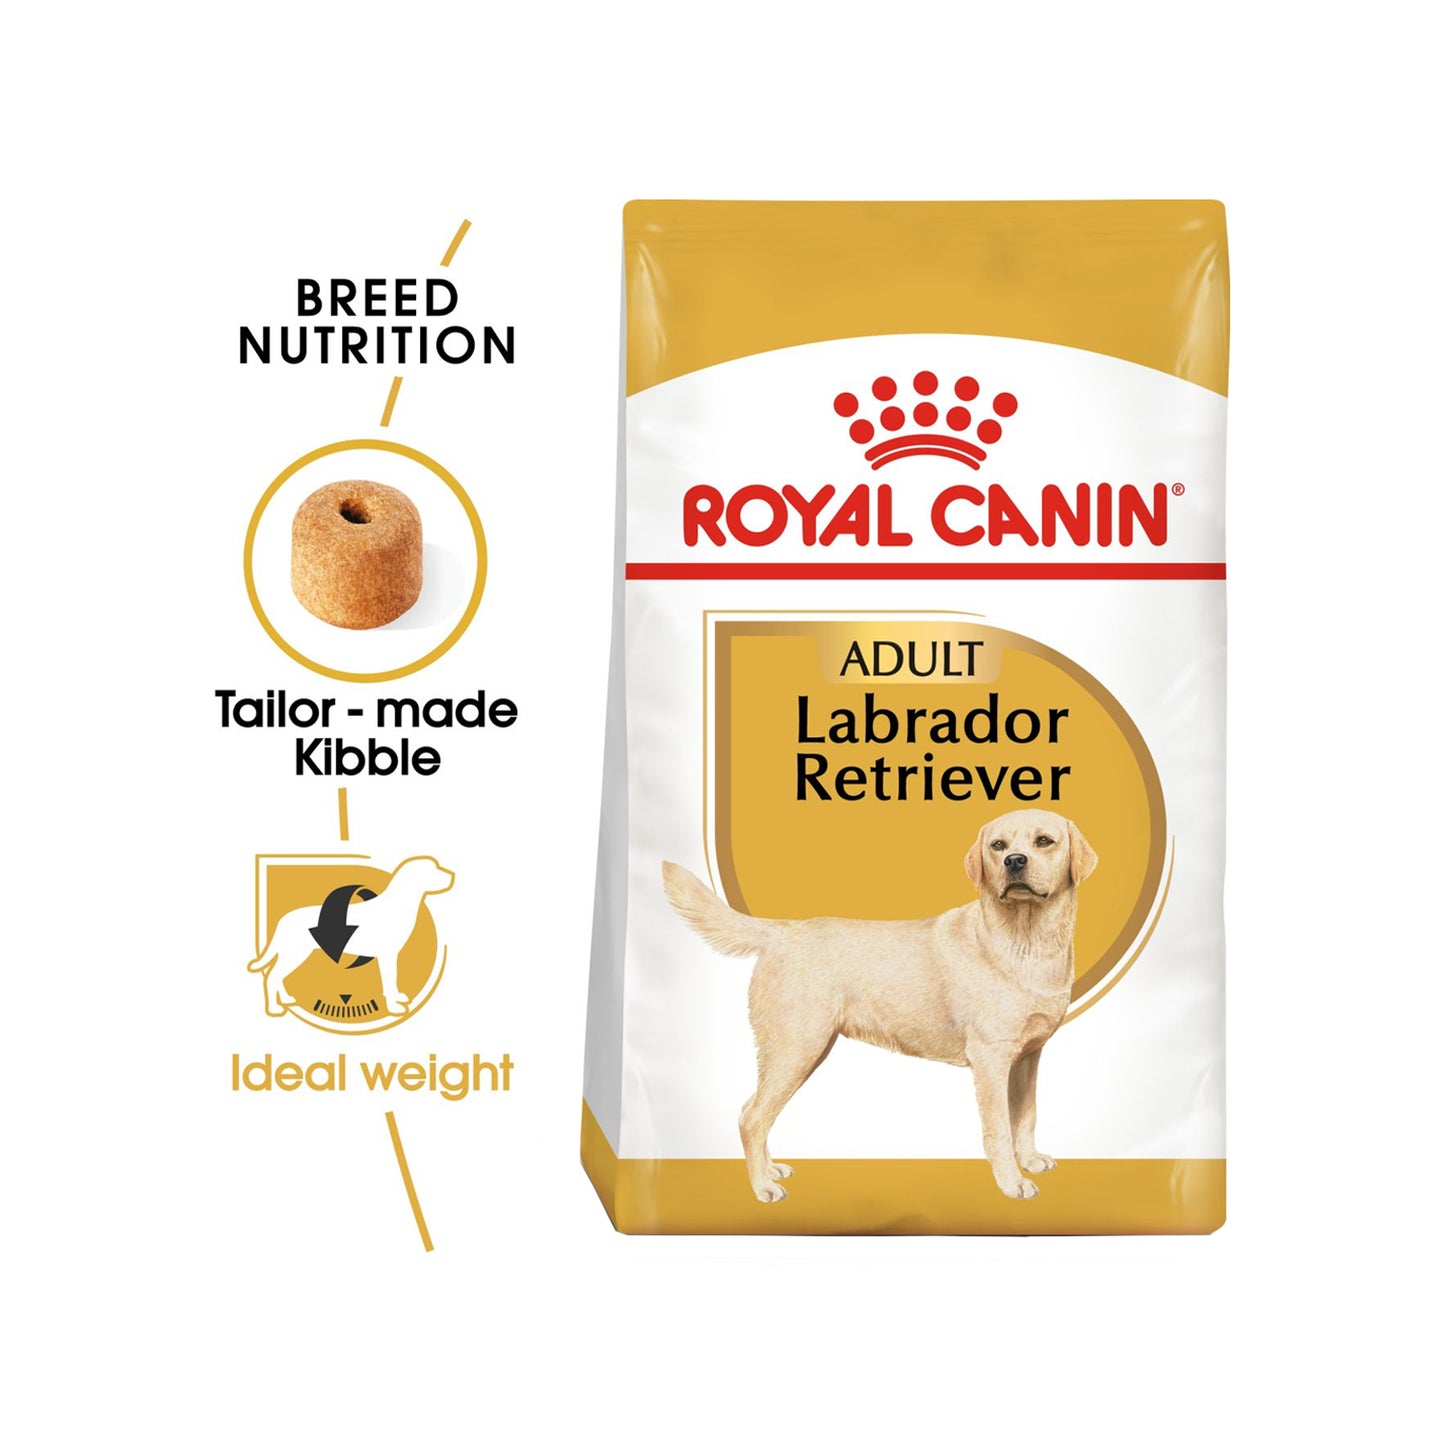 Royal Canin - Labrador Retriever Adult